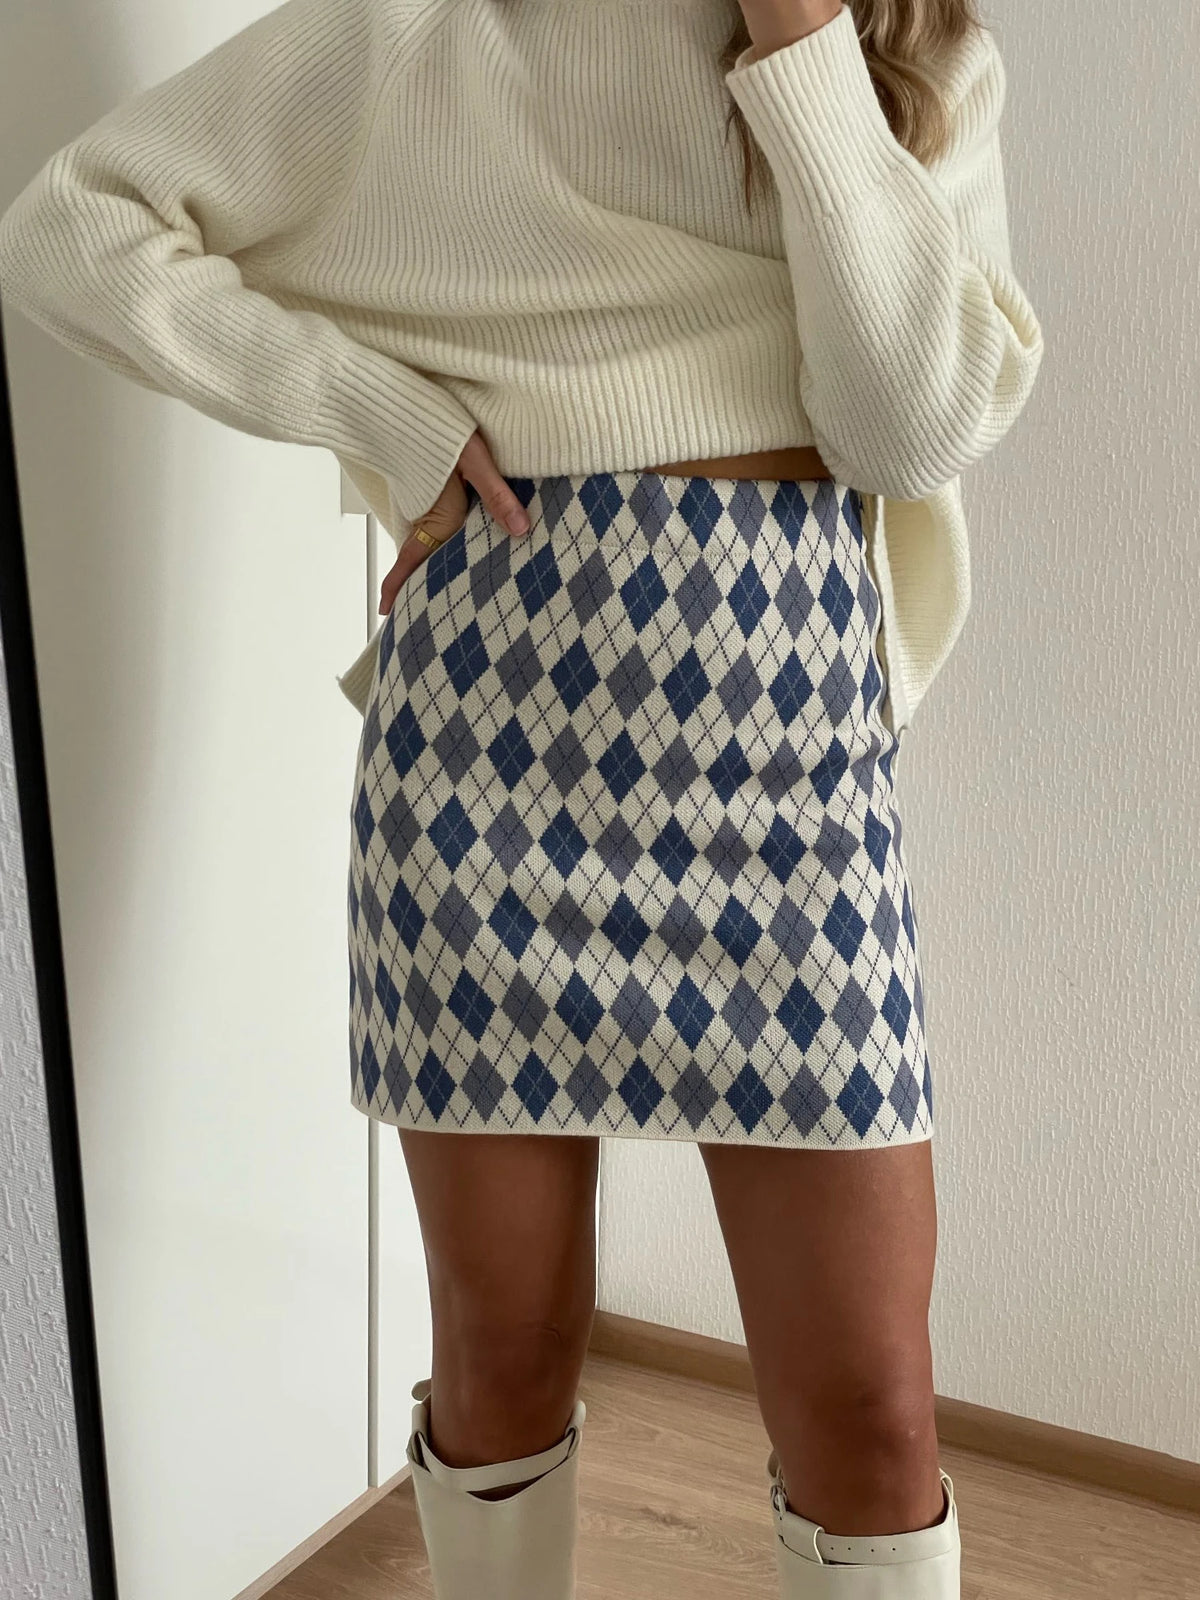 Vintage Rhombus Plaid Knitting Mini Skirt Fashion Women High Waist Bodycon One Step Sweater Skirt Jacquard B-007